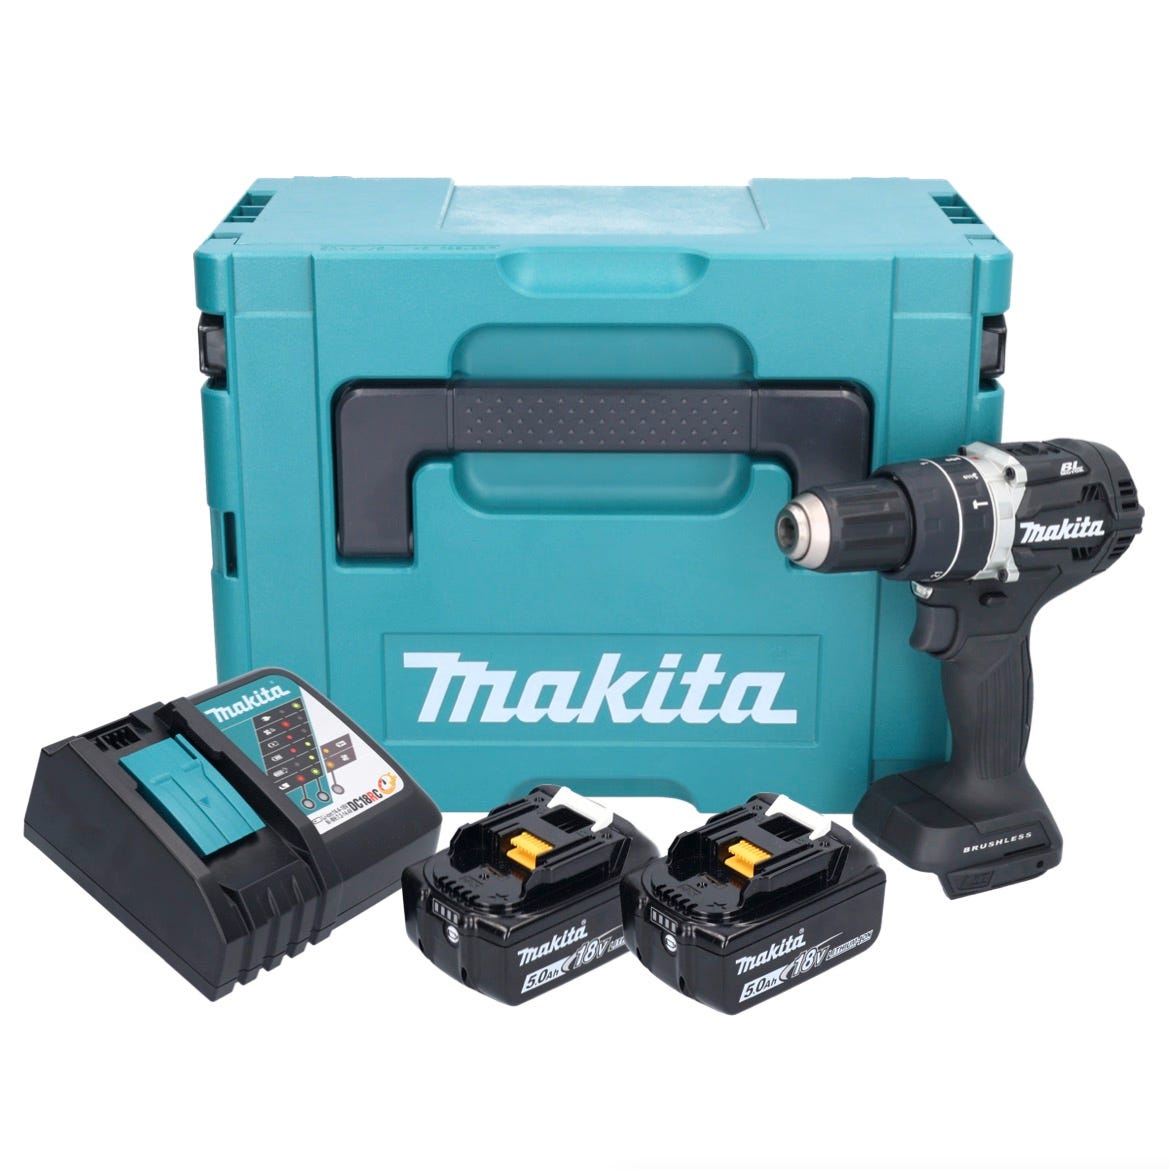 Makita DHP 484 RTJB Perceuse-visseuse à percussion sans fil 18 V 54 Nm Brushless noir + 2x batterie 5,0 Ah + chargeur + Makpac 0